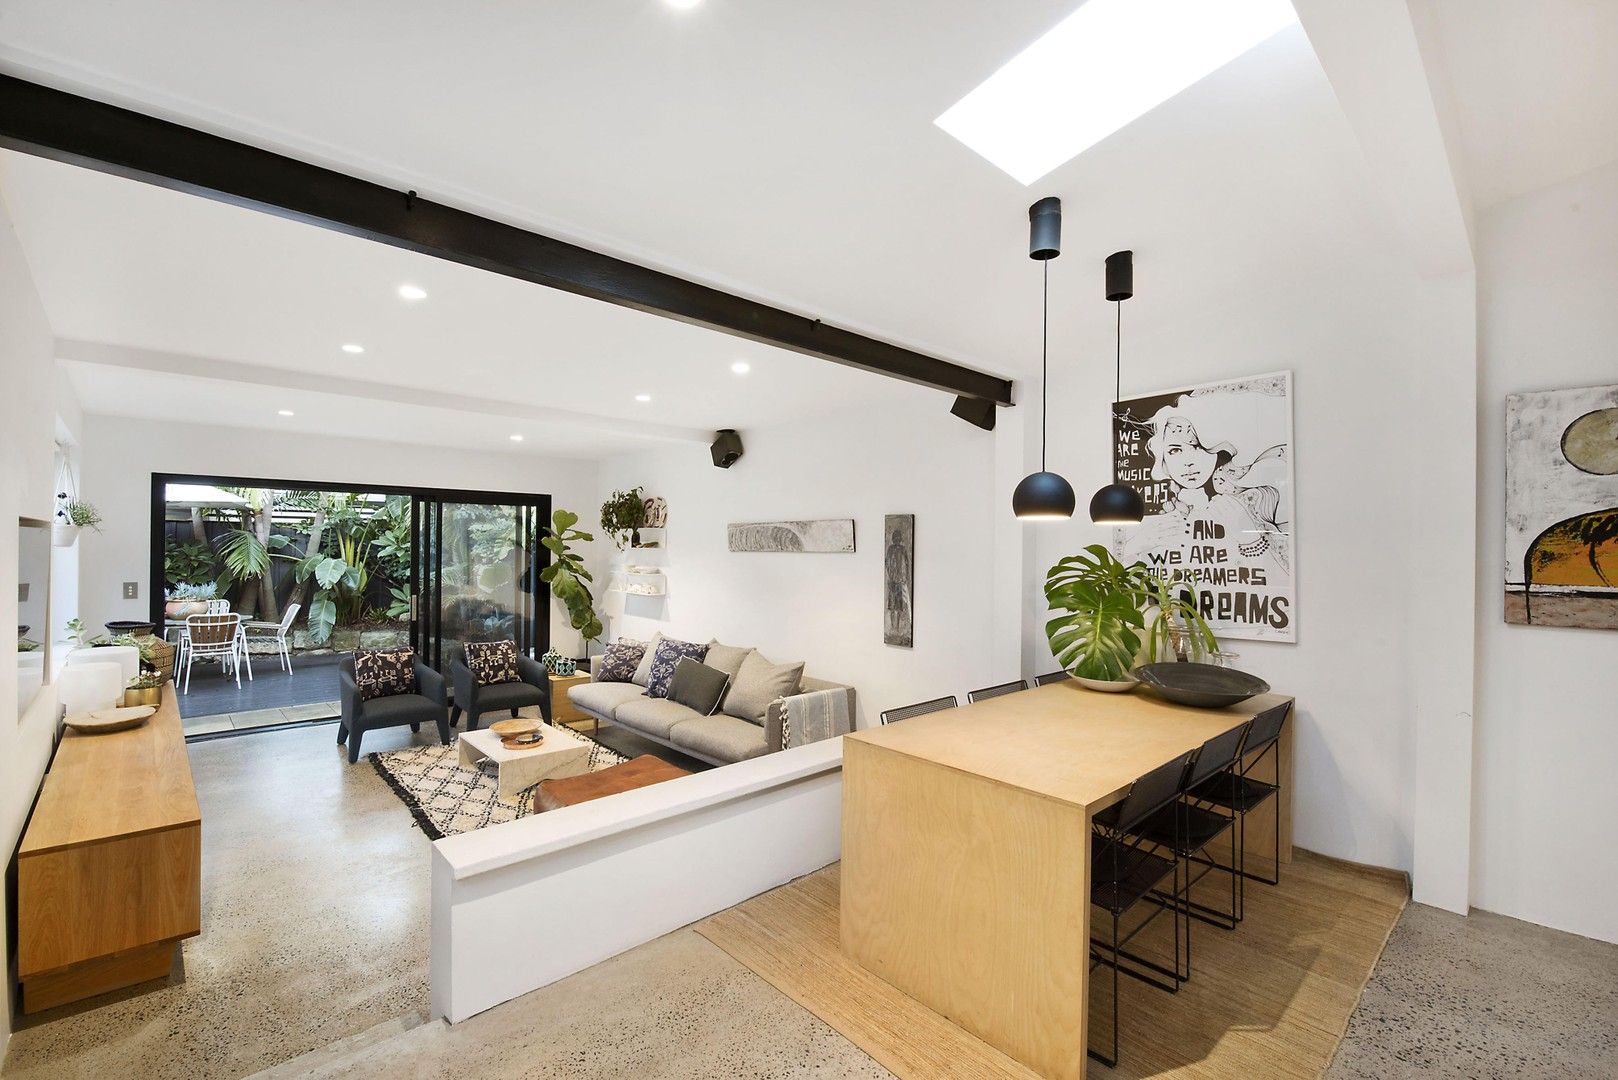 2 bedrooms House in 22 Wiley Street WAVERLEY NSW, 2024